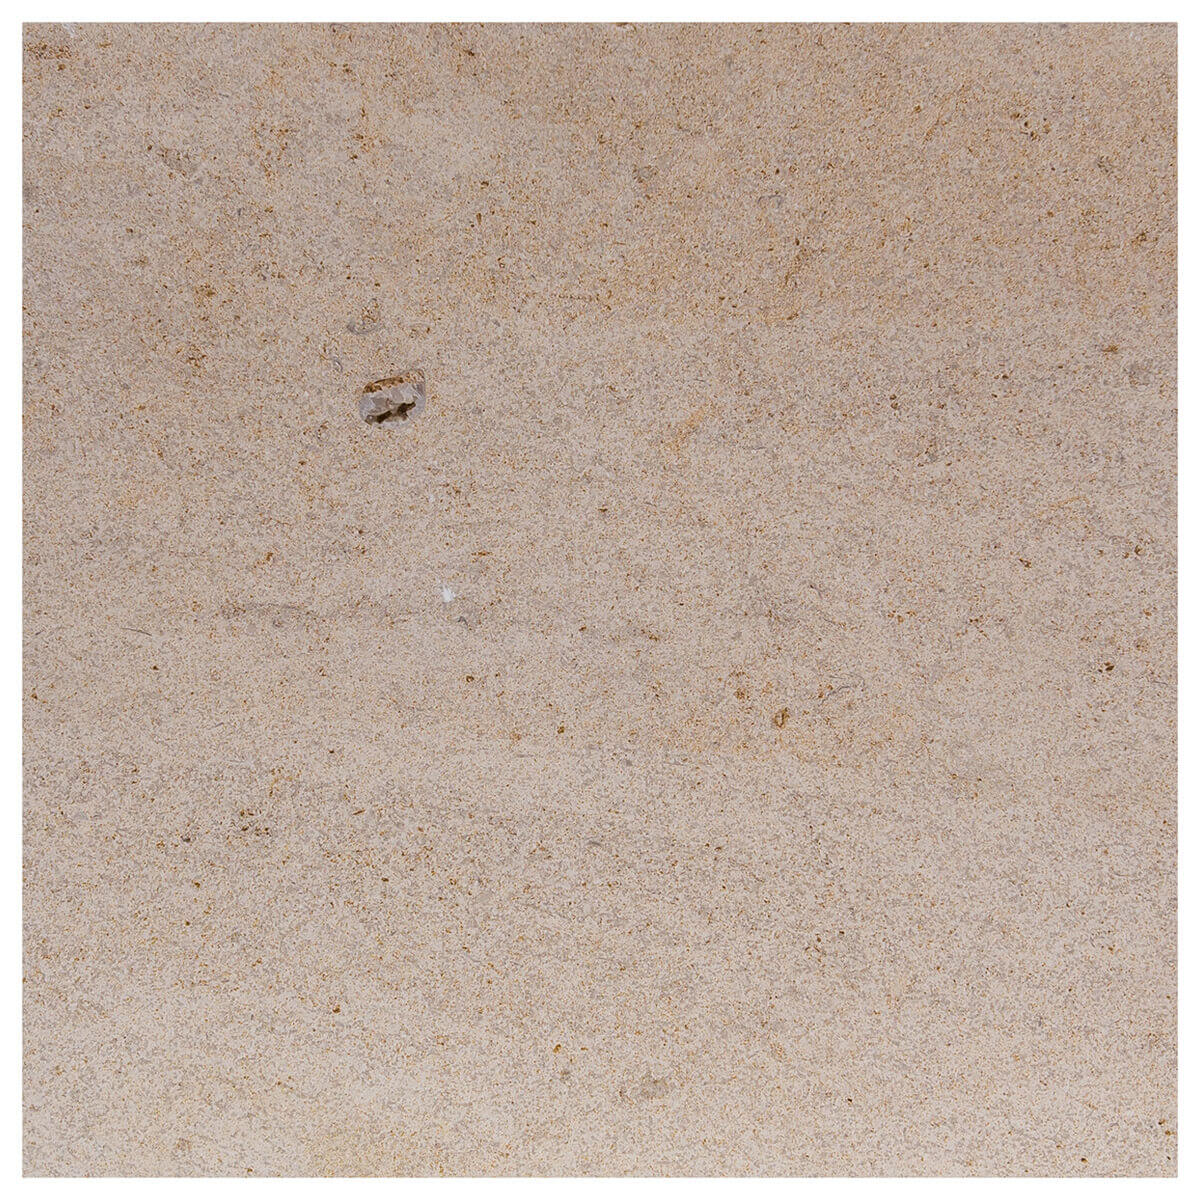 haussmann beaumaniere classic limestone square natural stone field tile 12x12 honed